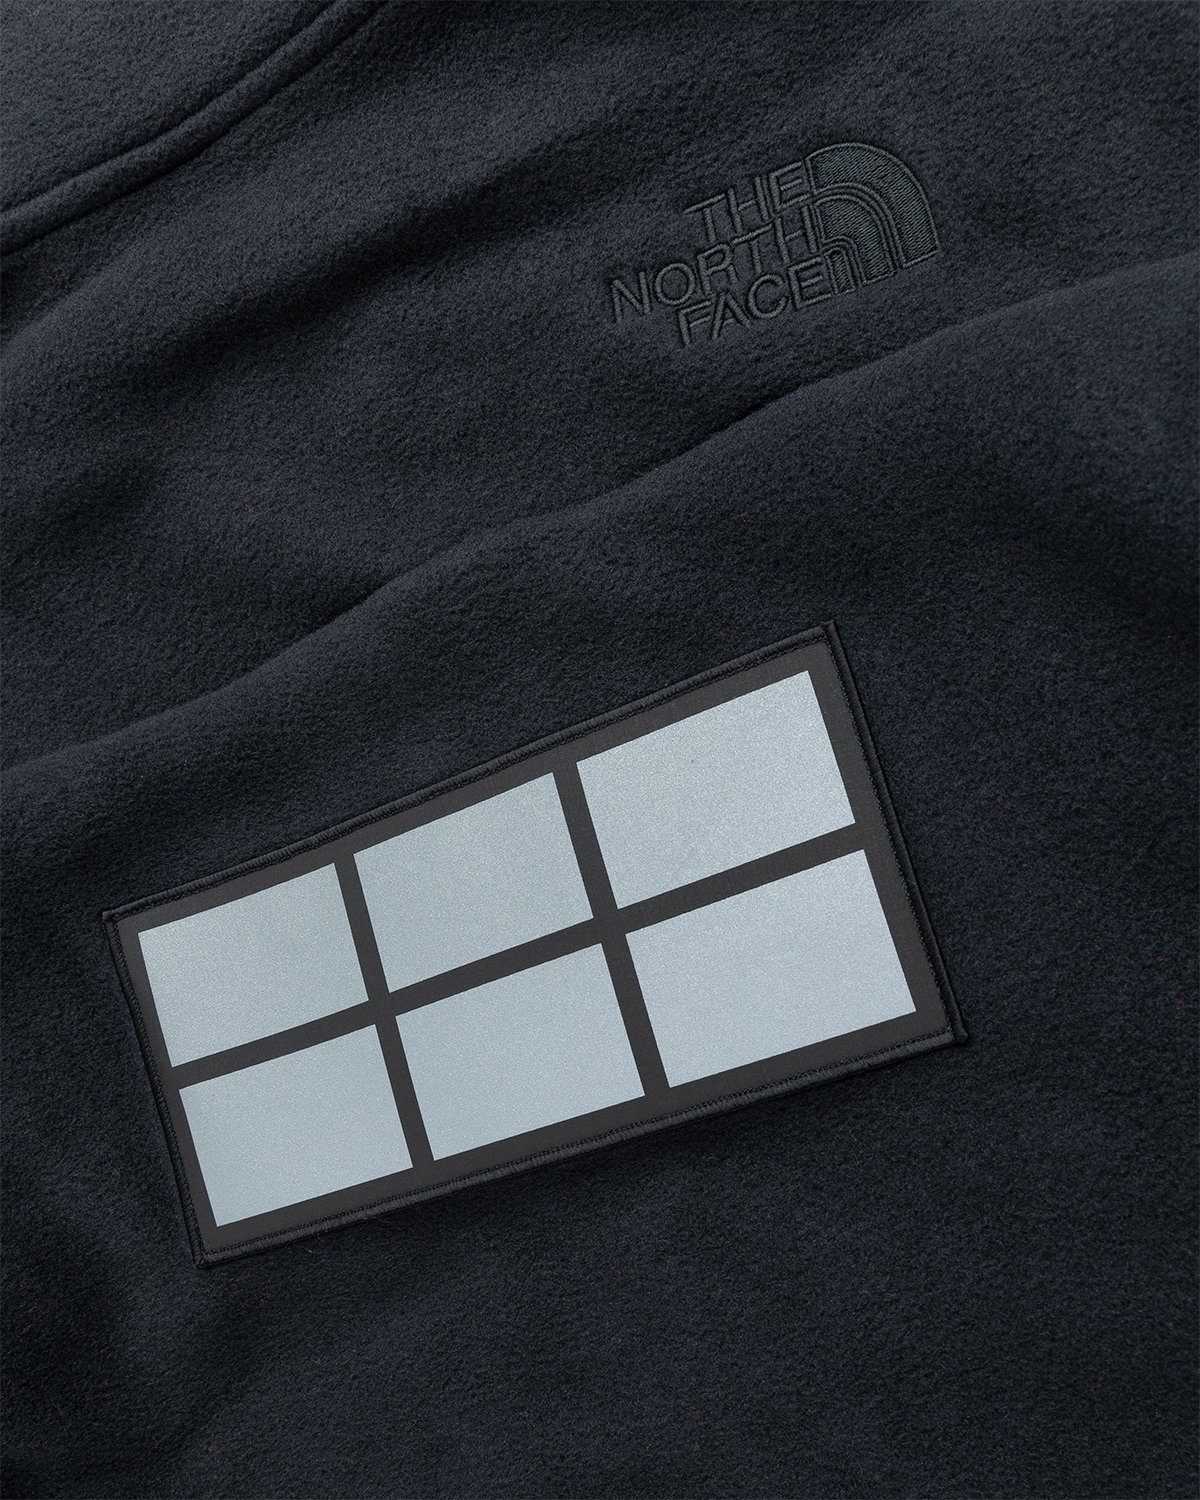 The North Face - CTAE Full-Zip Fleece Black - Clothing - Black - Image 4